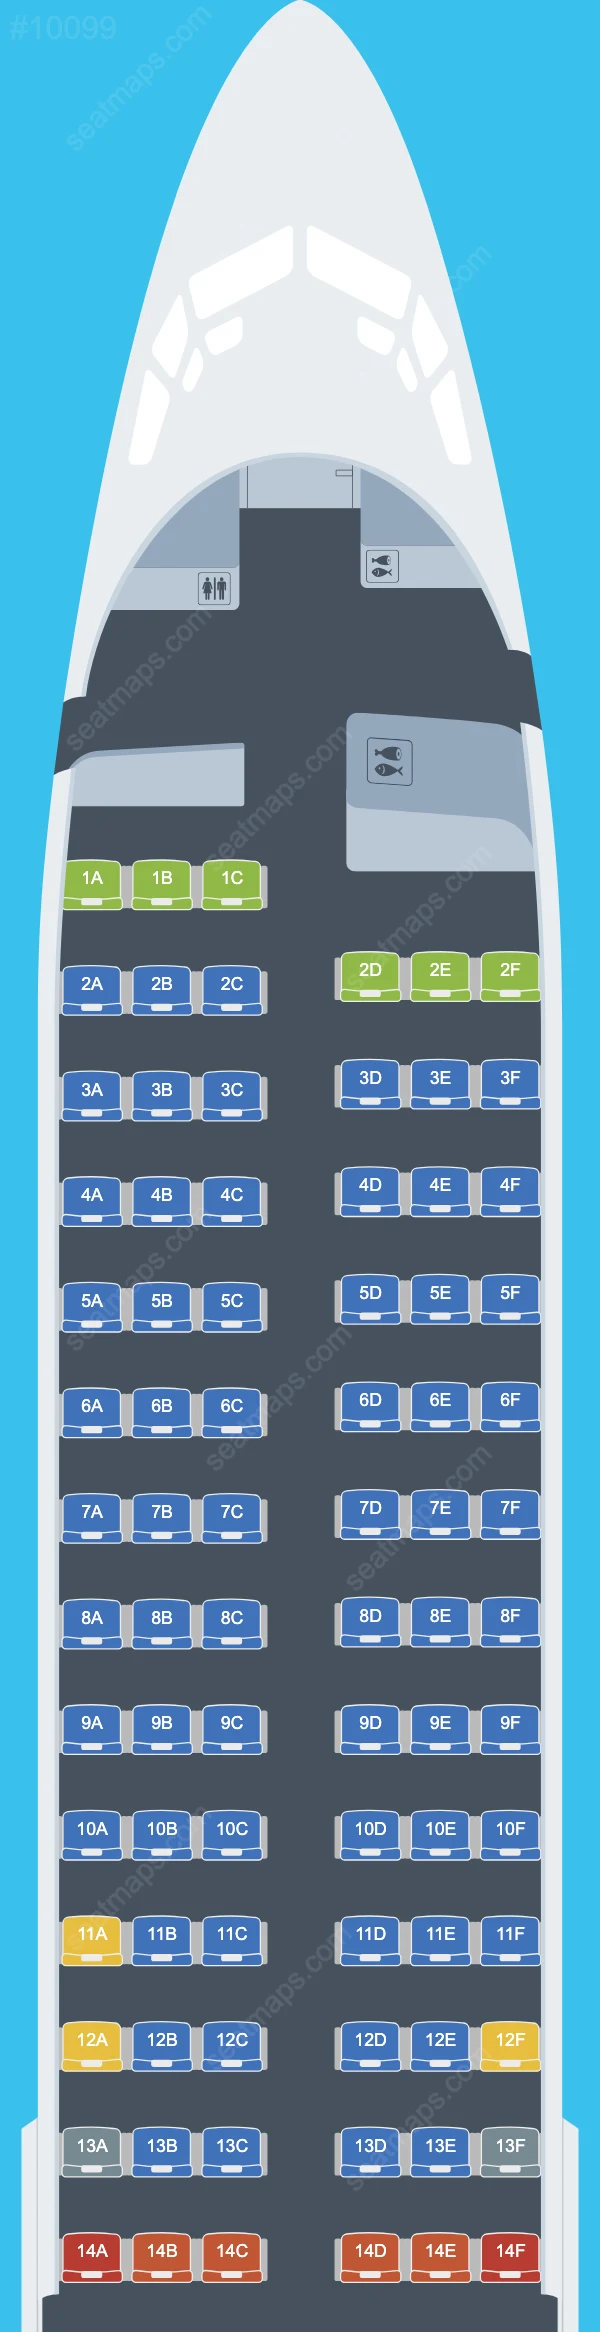 UTair Boeing 737 Seat Maps 737-800 V.2